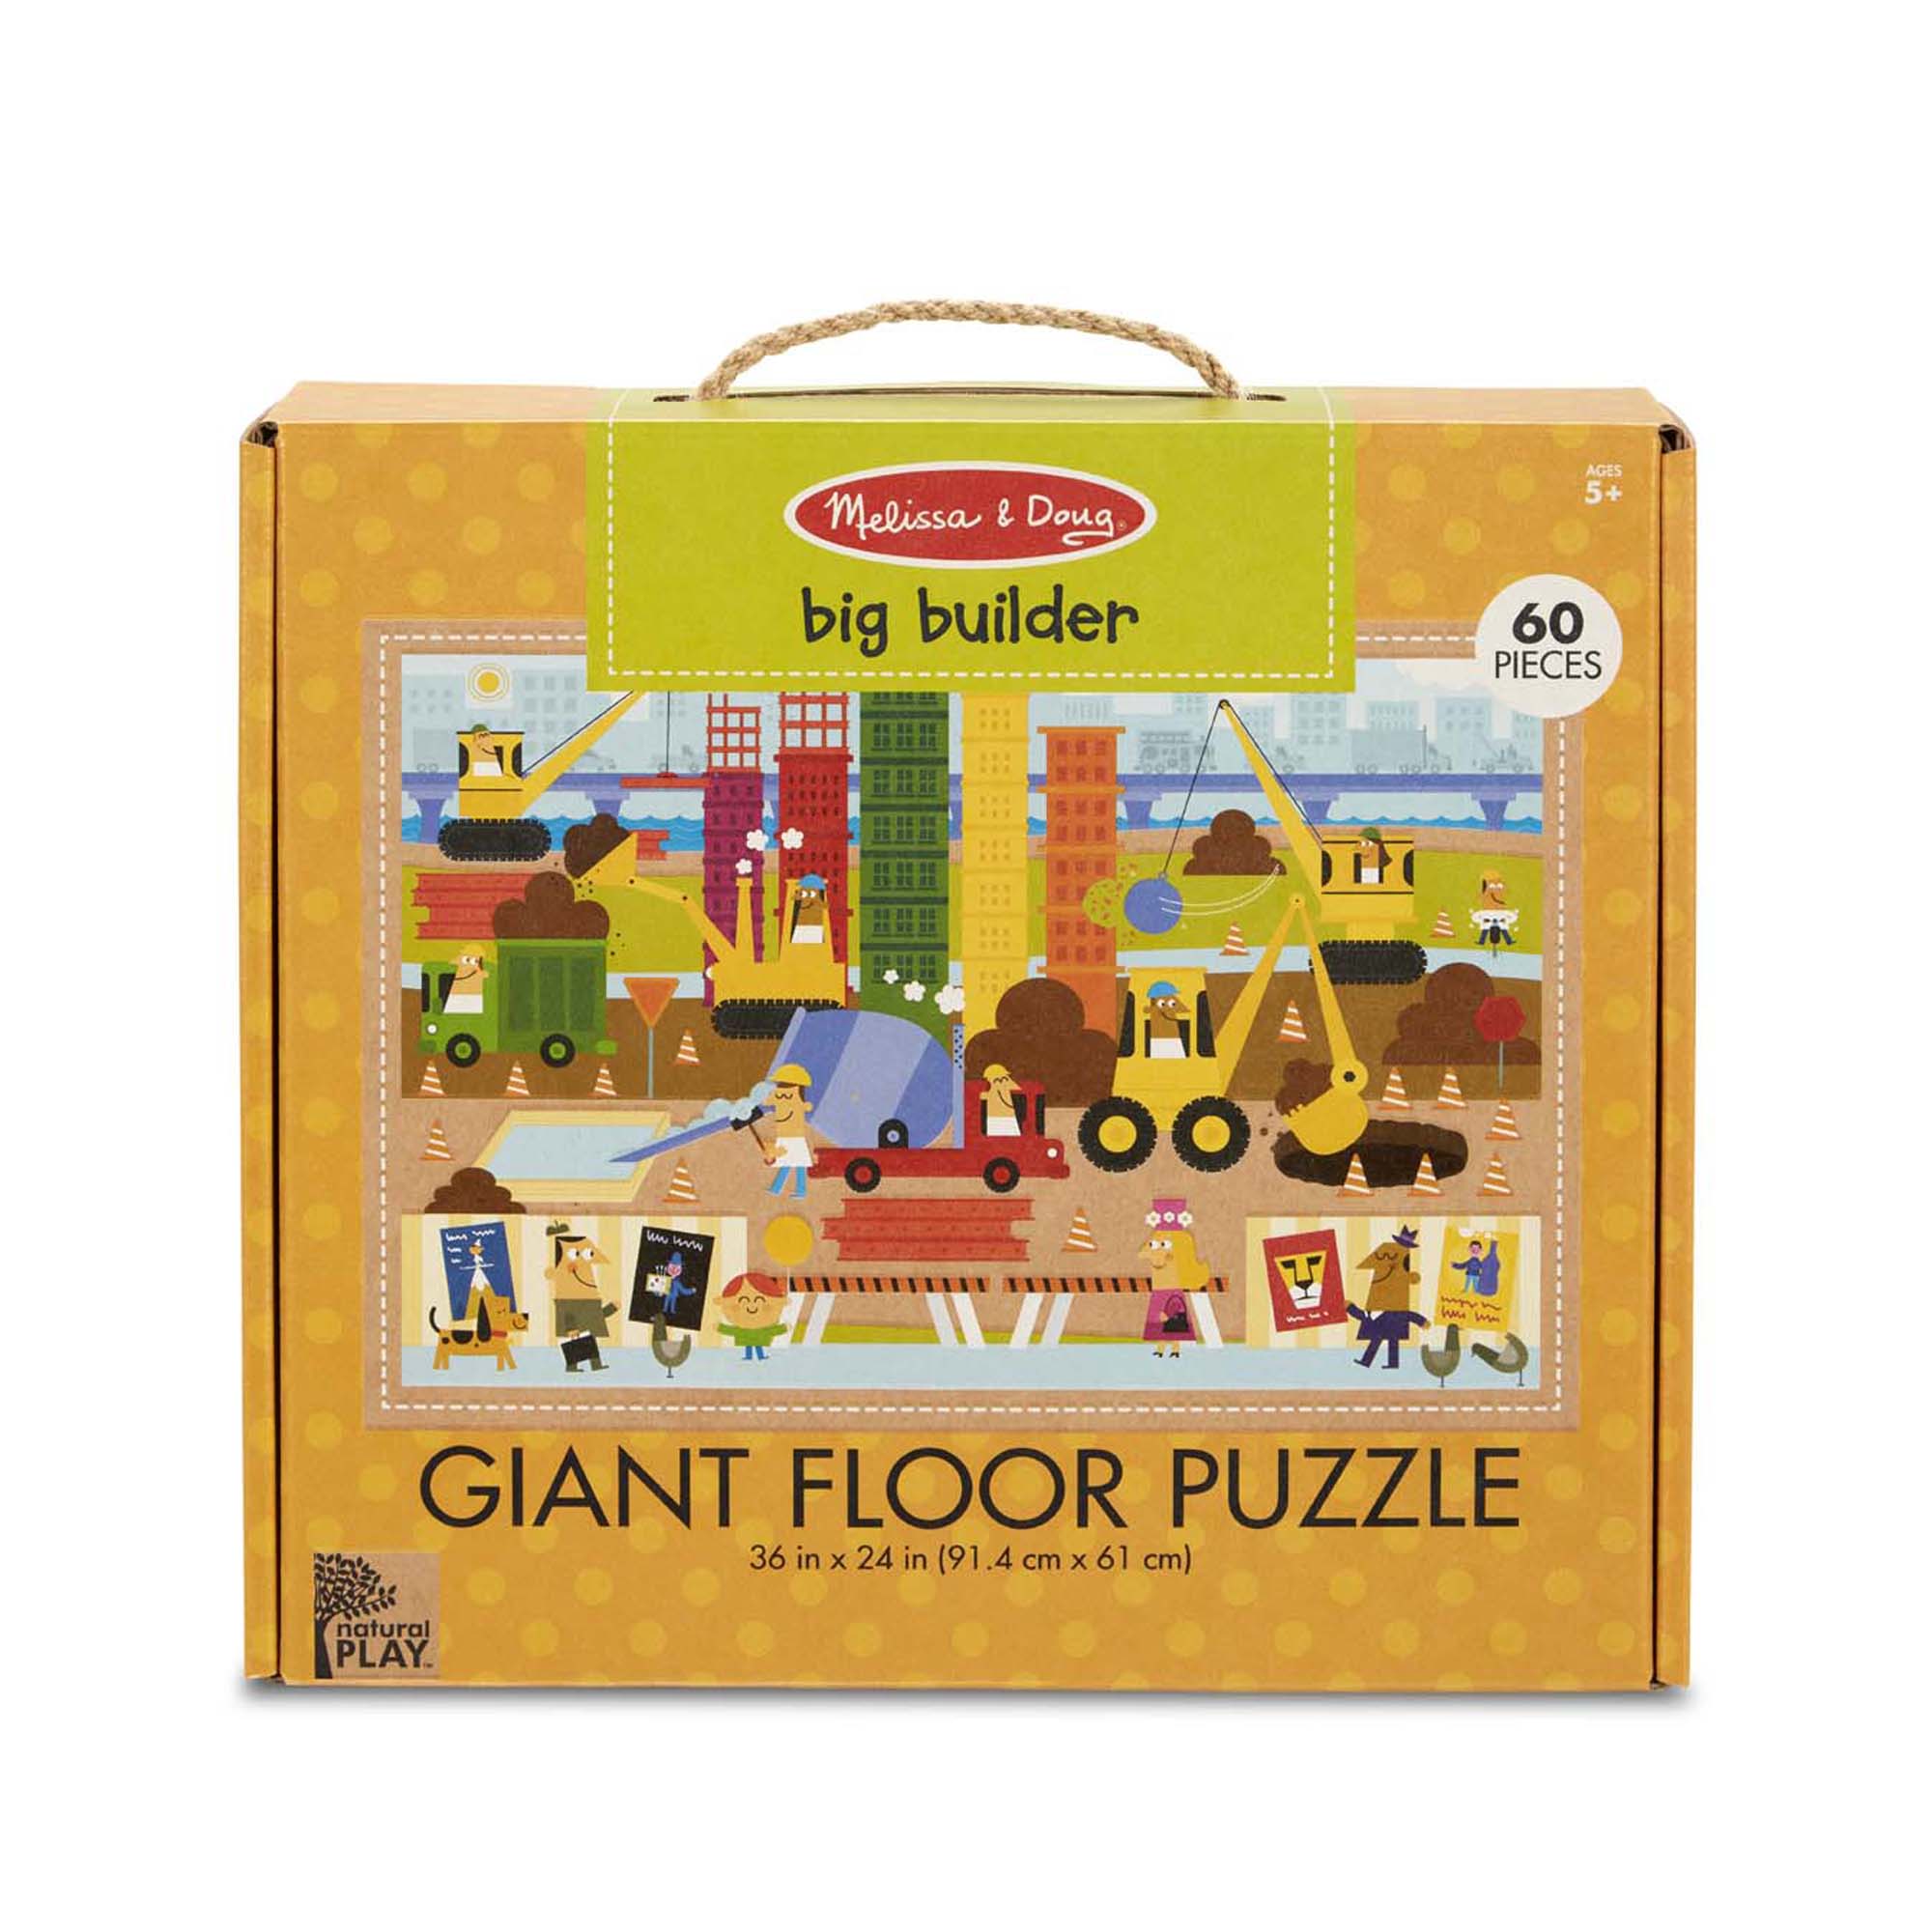 NP Giant Floor Puzzle Big Builder Best Of As Seen On TV